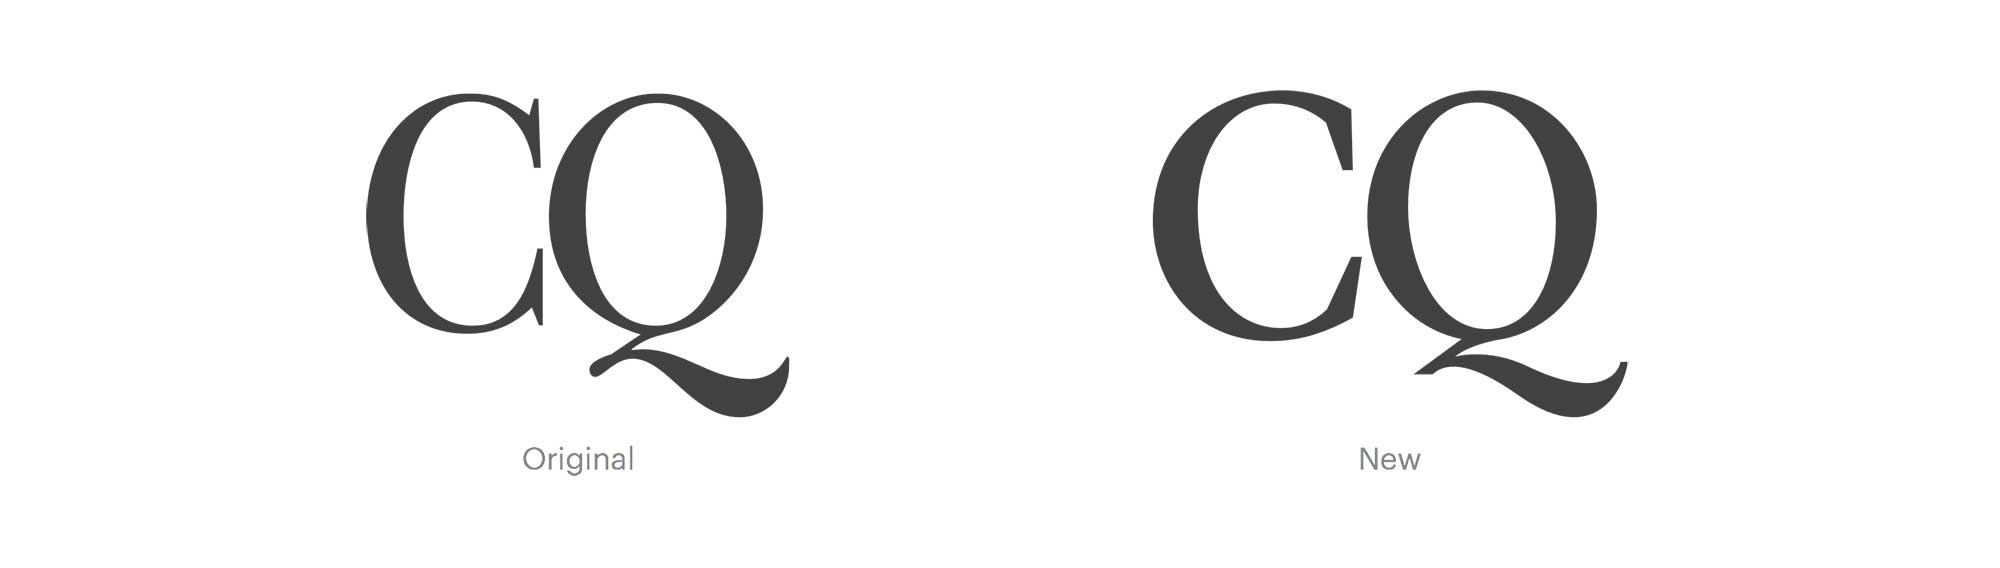 CQ Logo - Michael Stanaland » CQ logo and branding